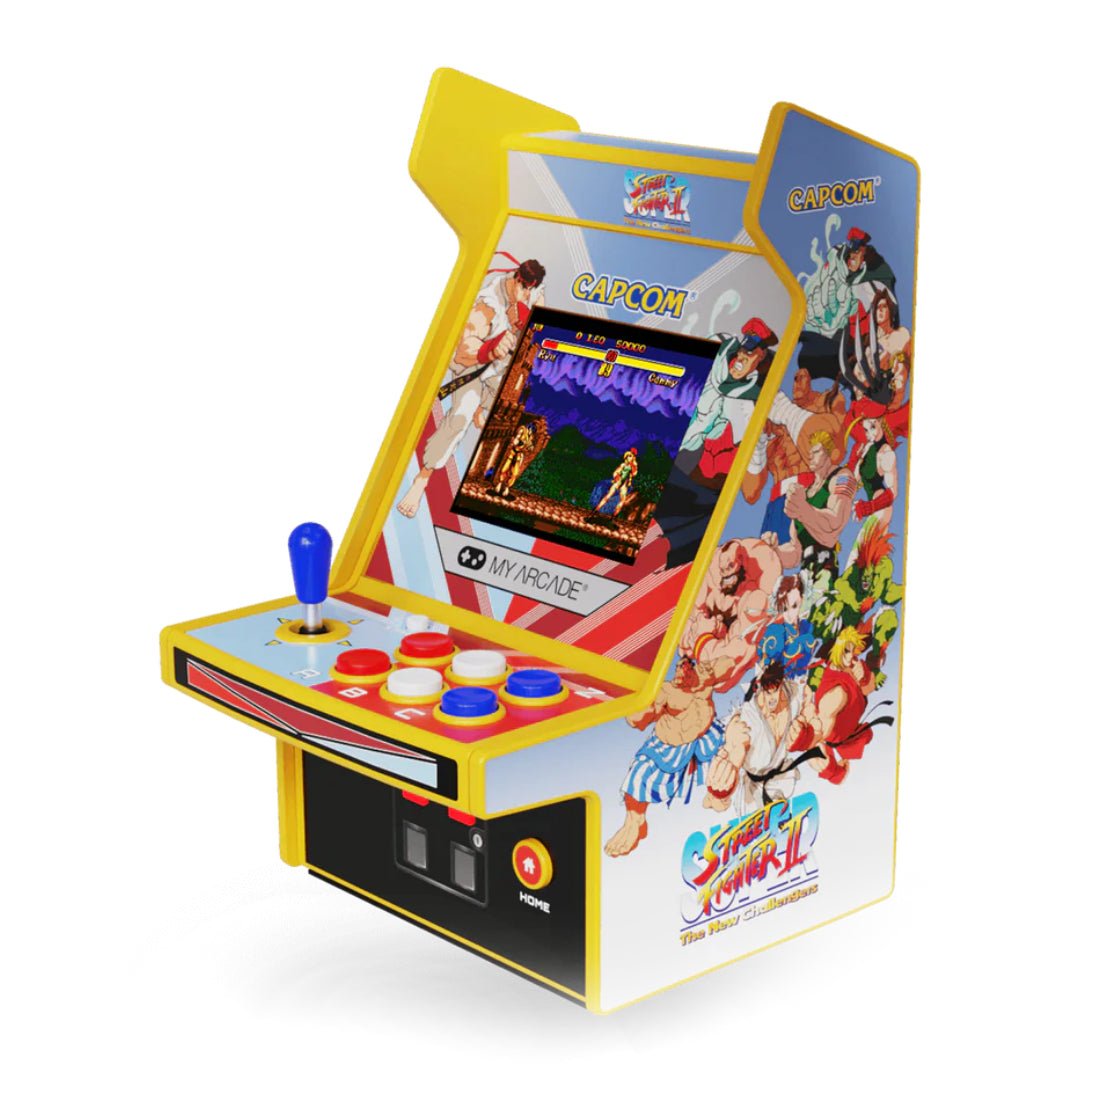 My Arcade Super Street Fighter II Micro Player Pro Game Arcade - جهاز ألعاب - Store 974 | ستور ٩٧٤